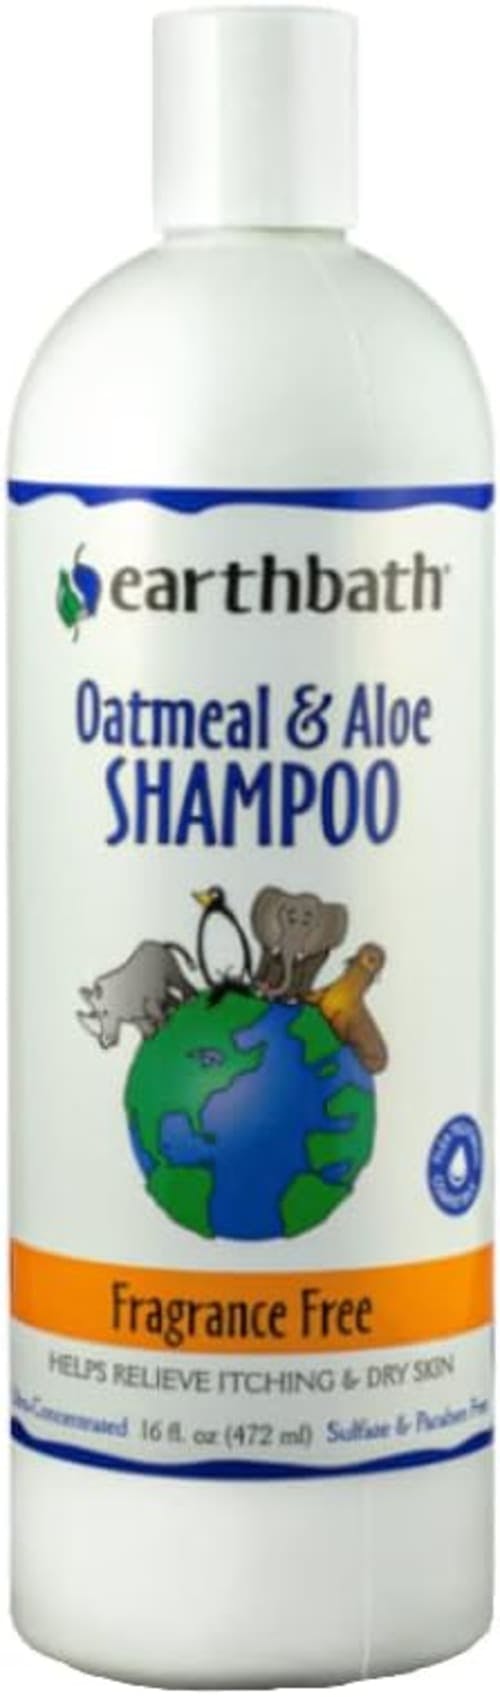 Earthbath Sensitive Skin Fragrance-Free Shampoo review